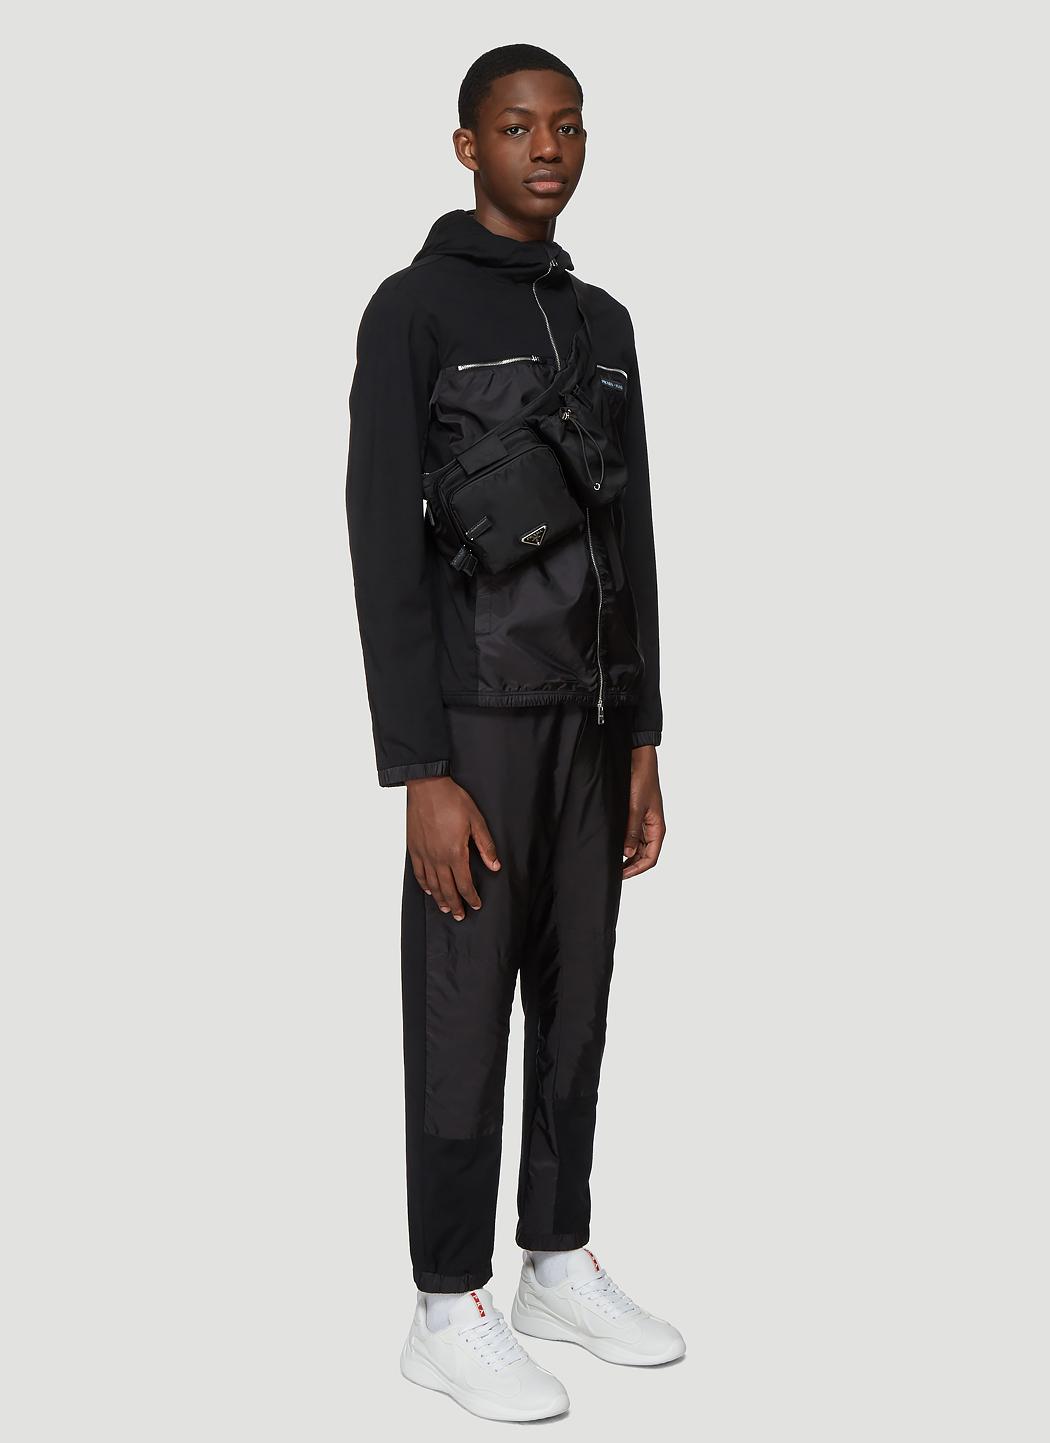 Prada Cotton Bi-material Track Jacket In Black for Men - Lyst